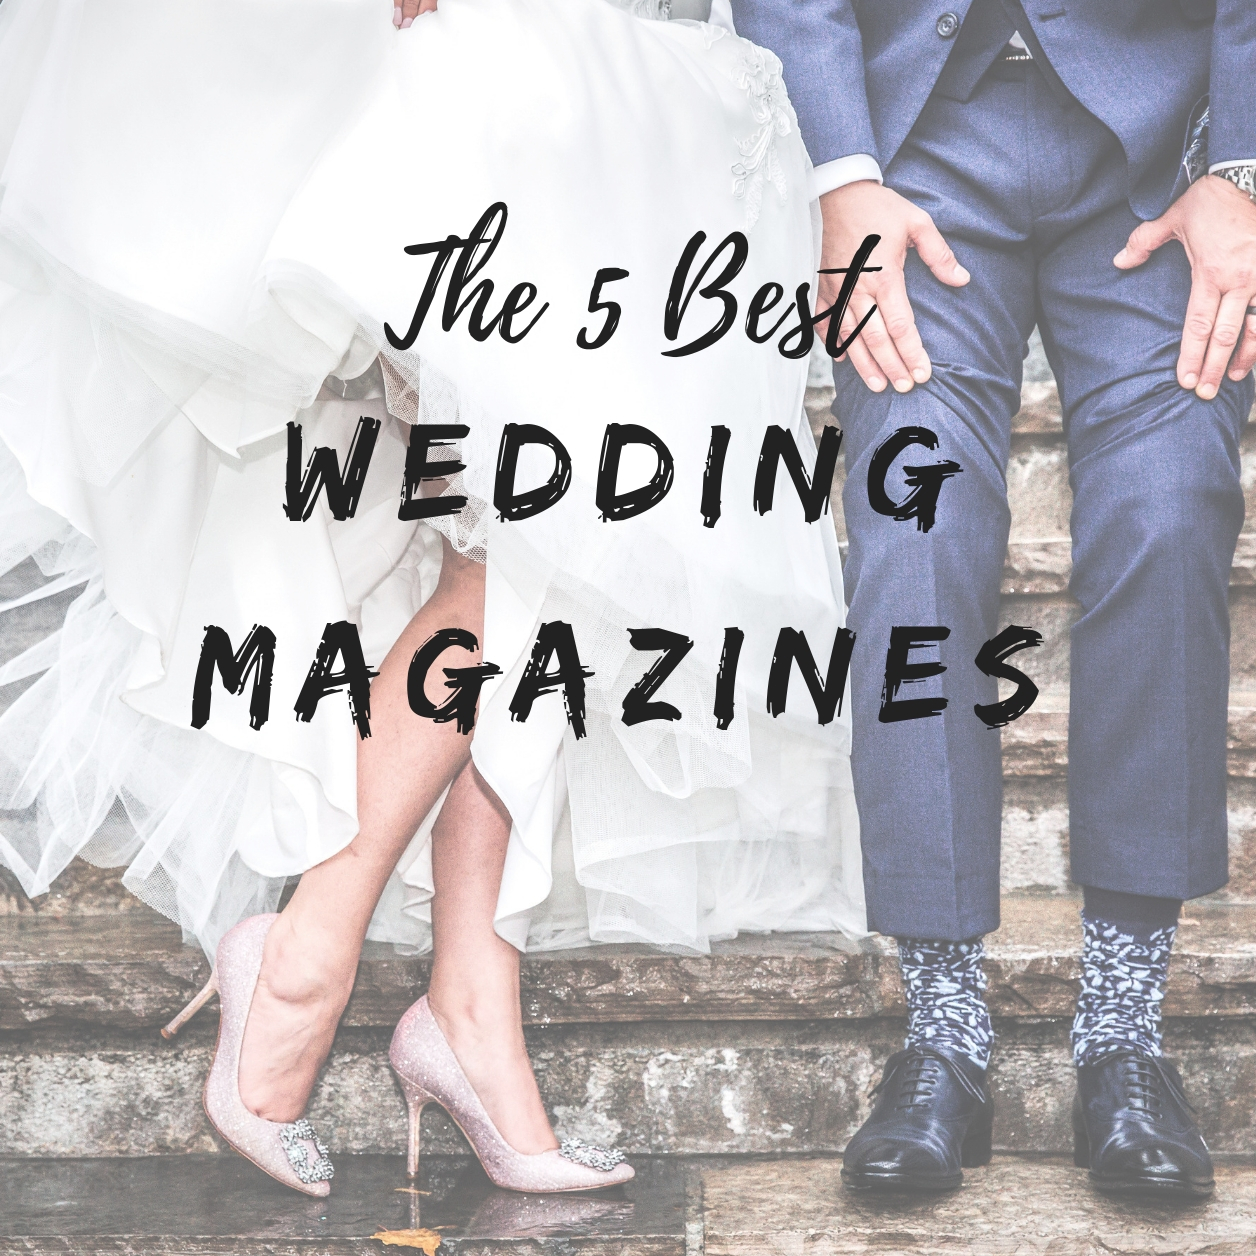 The 5 Best Wedding Magazines